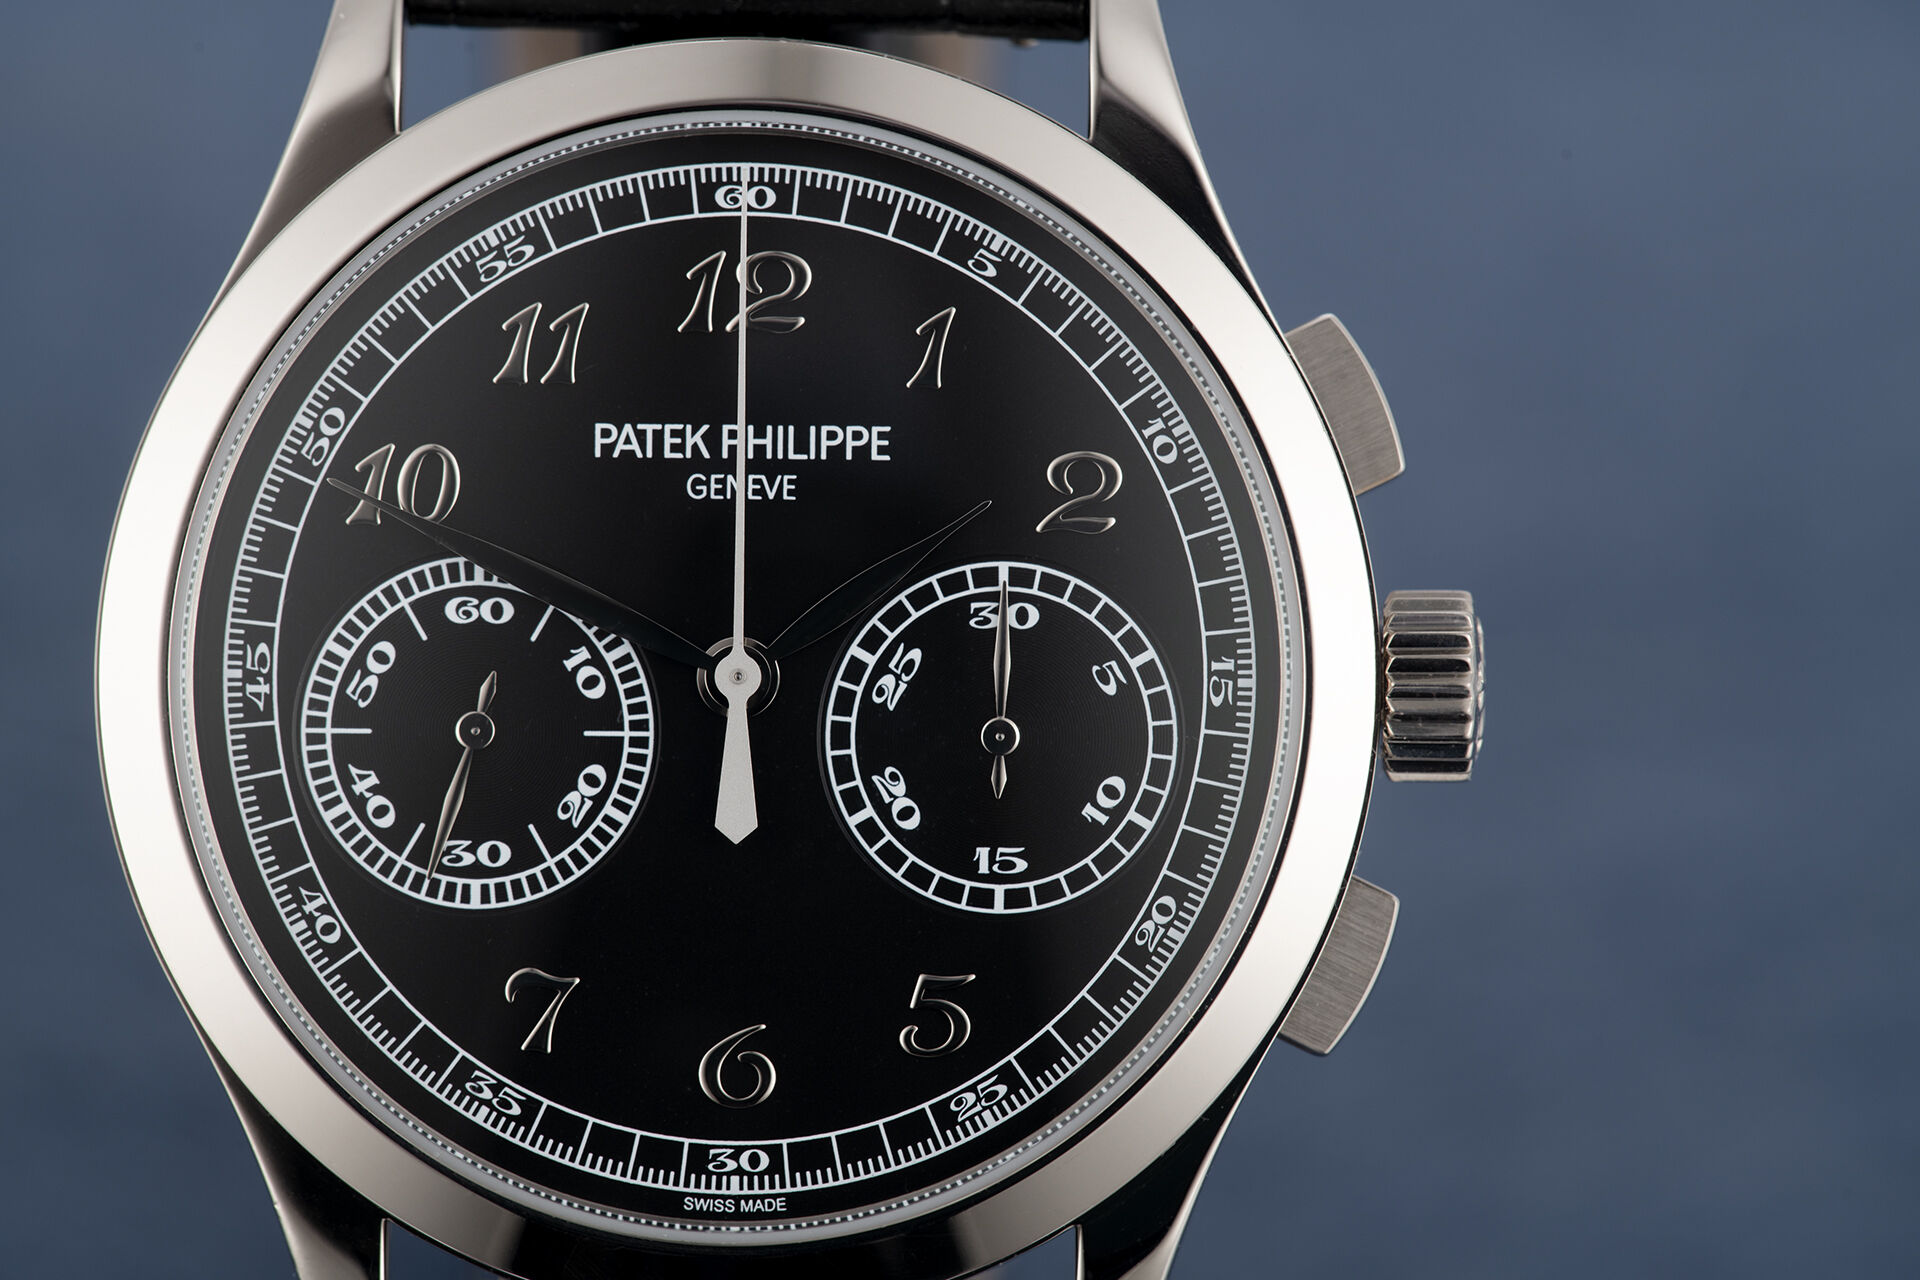 ref 5170G-010 | No Longer In Production | Patek Philippe Chronograph